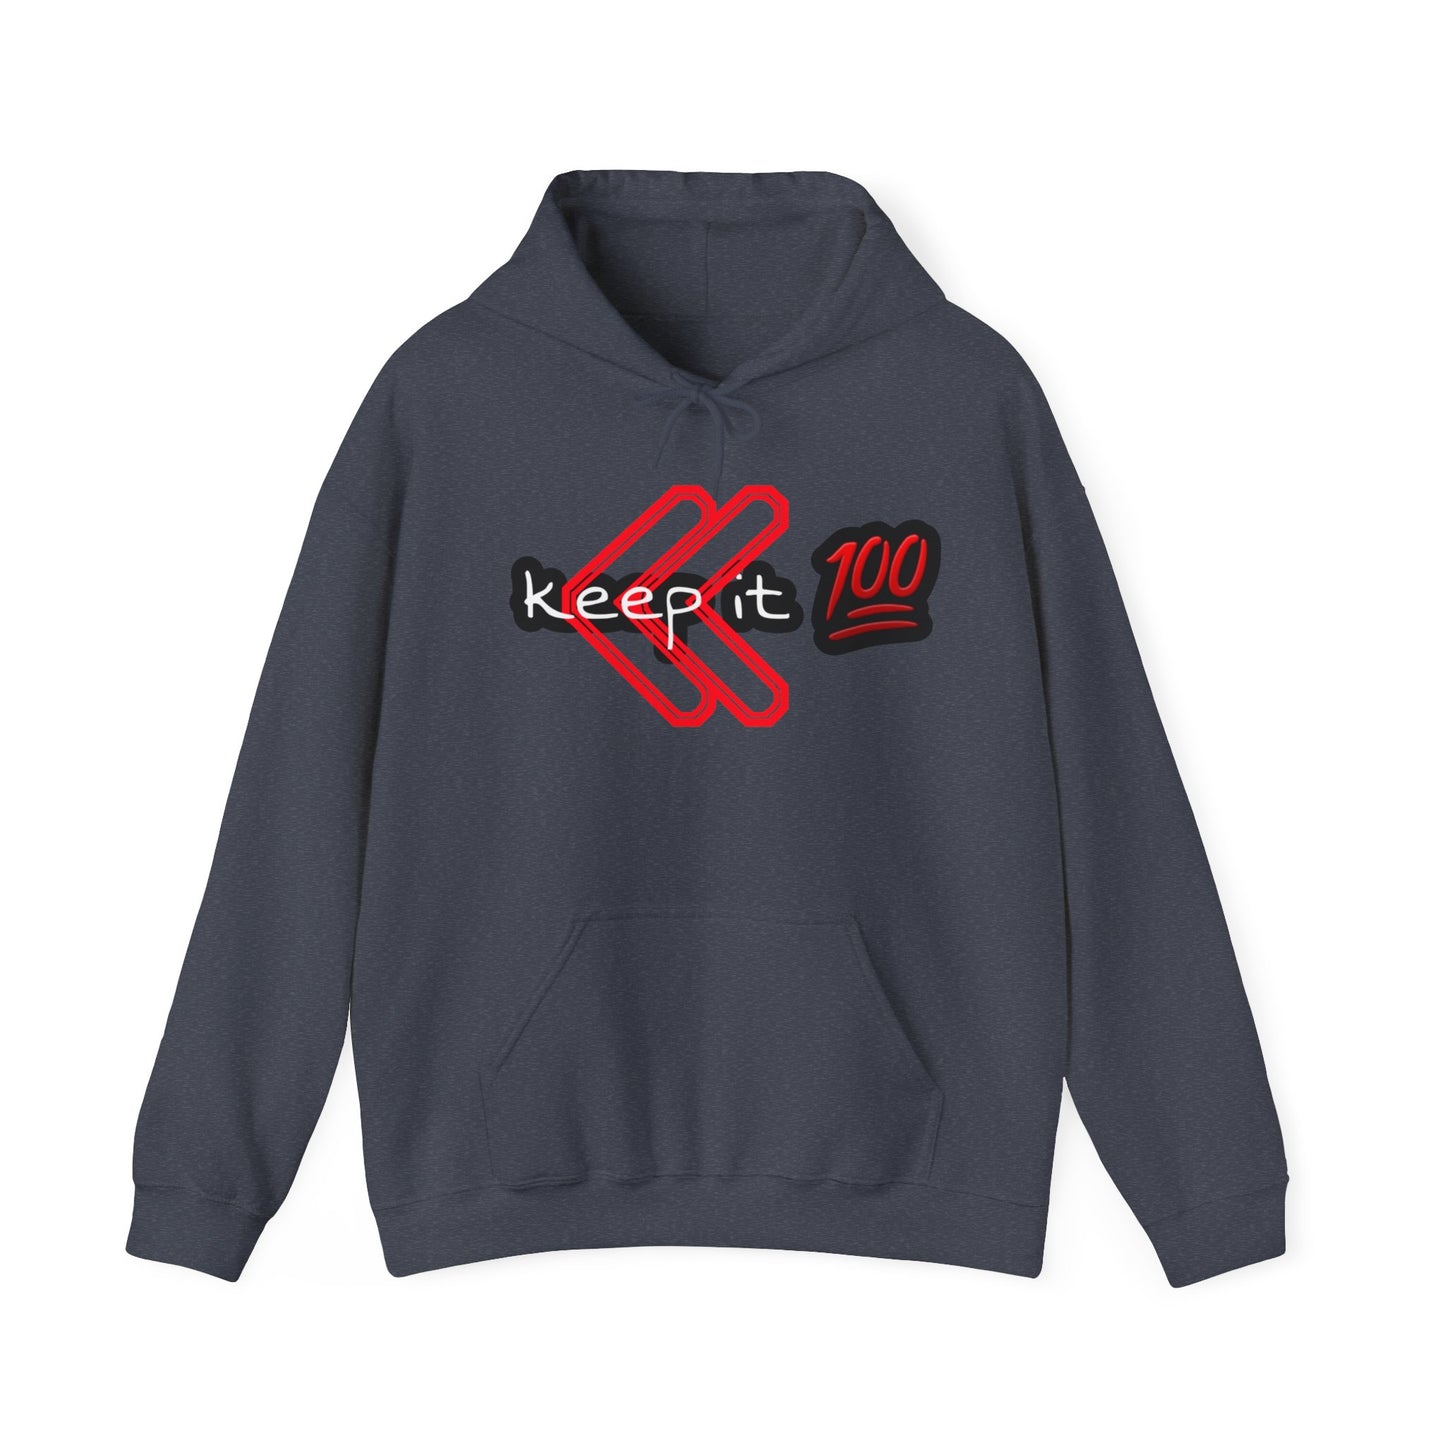 Keep it 💯 Hooded Sweatshirt